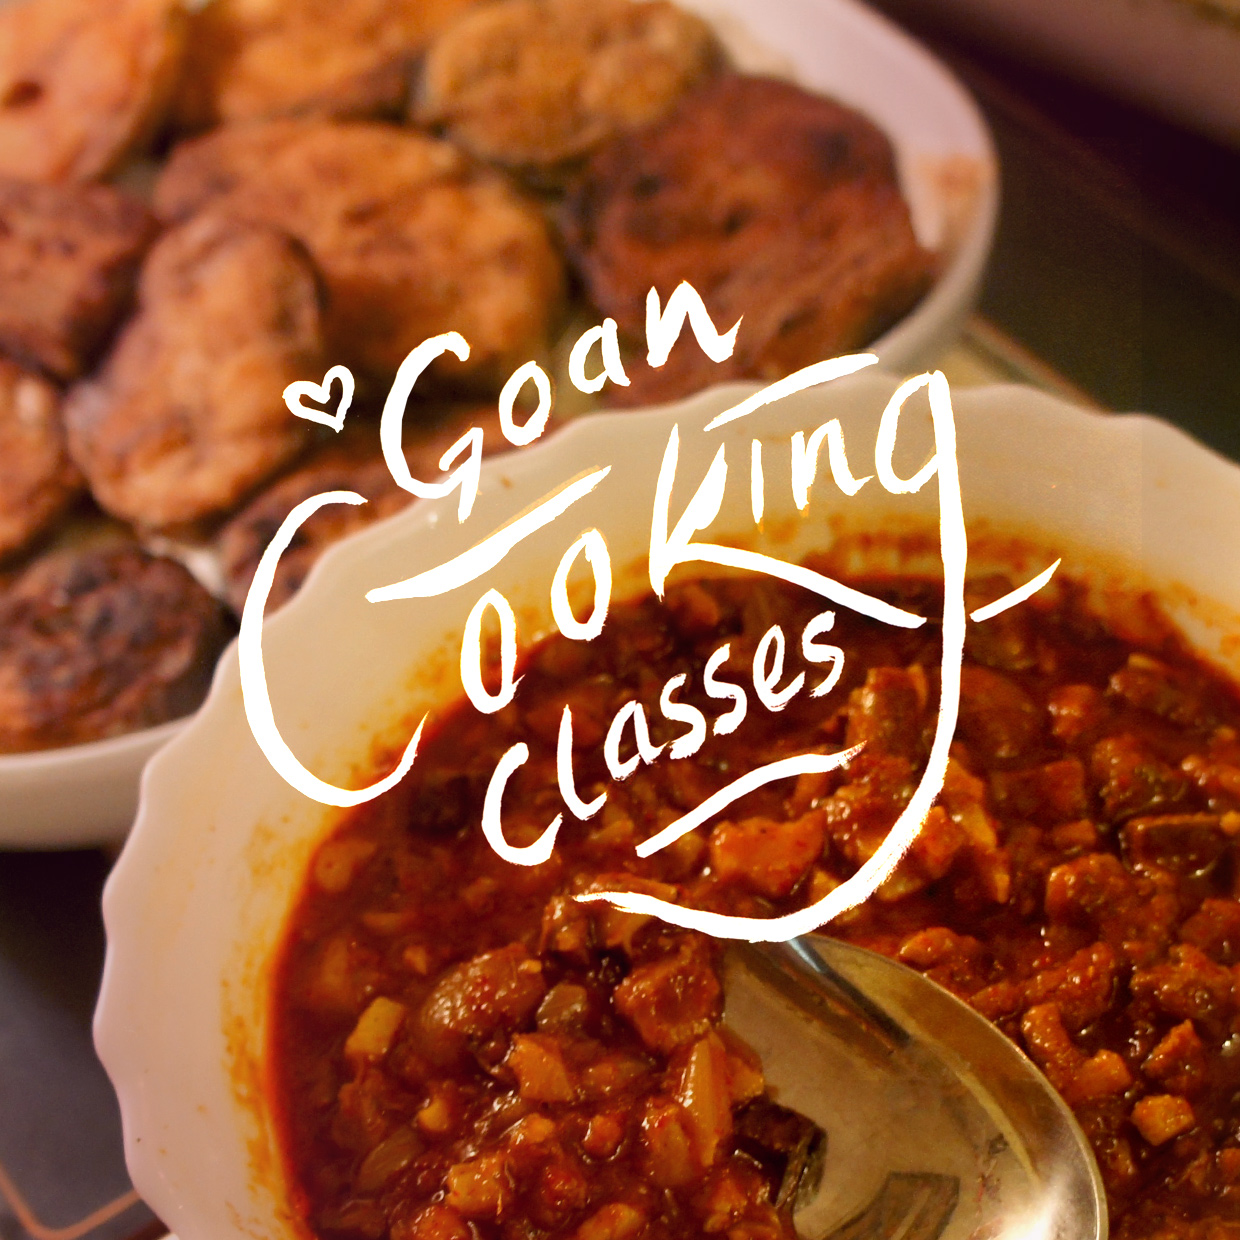 Goan Cooking Classes